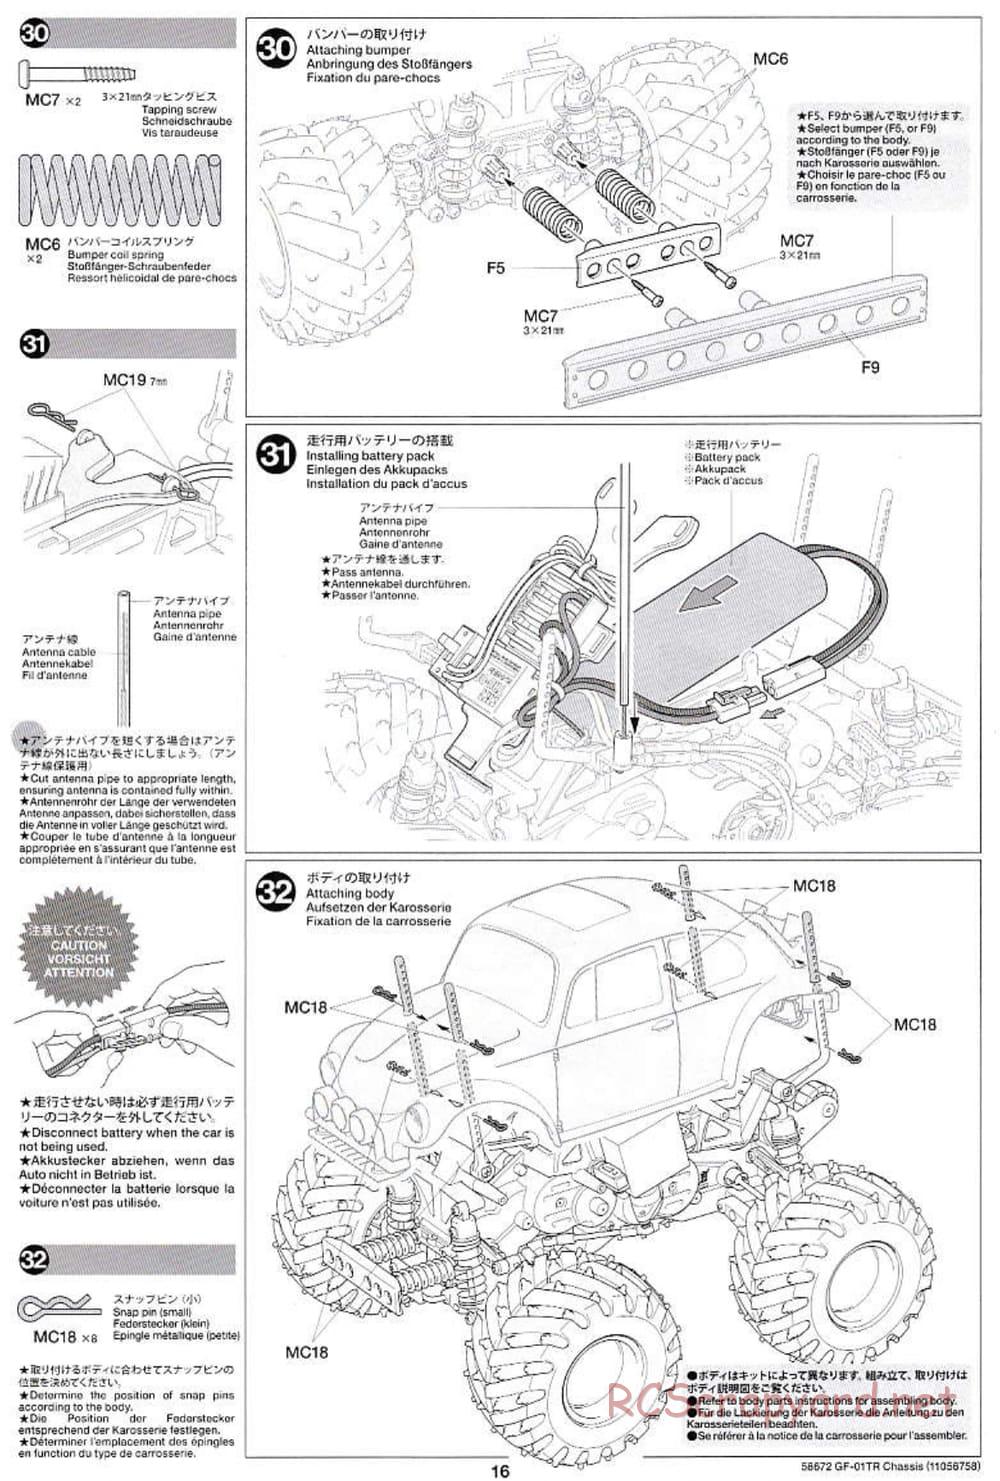 Tamiya - Monster Beetle Trail - GF-01TR Chassis - Manual - Page 16